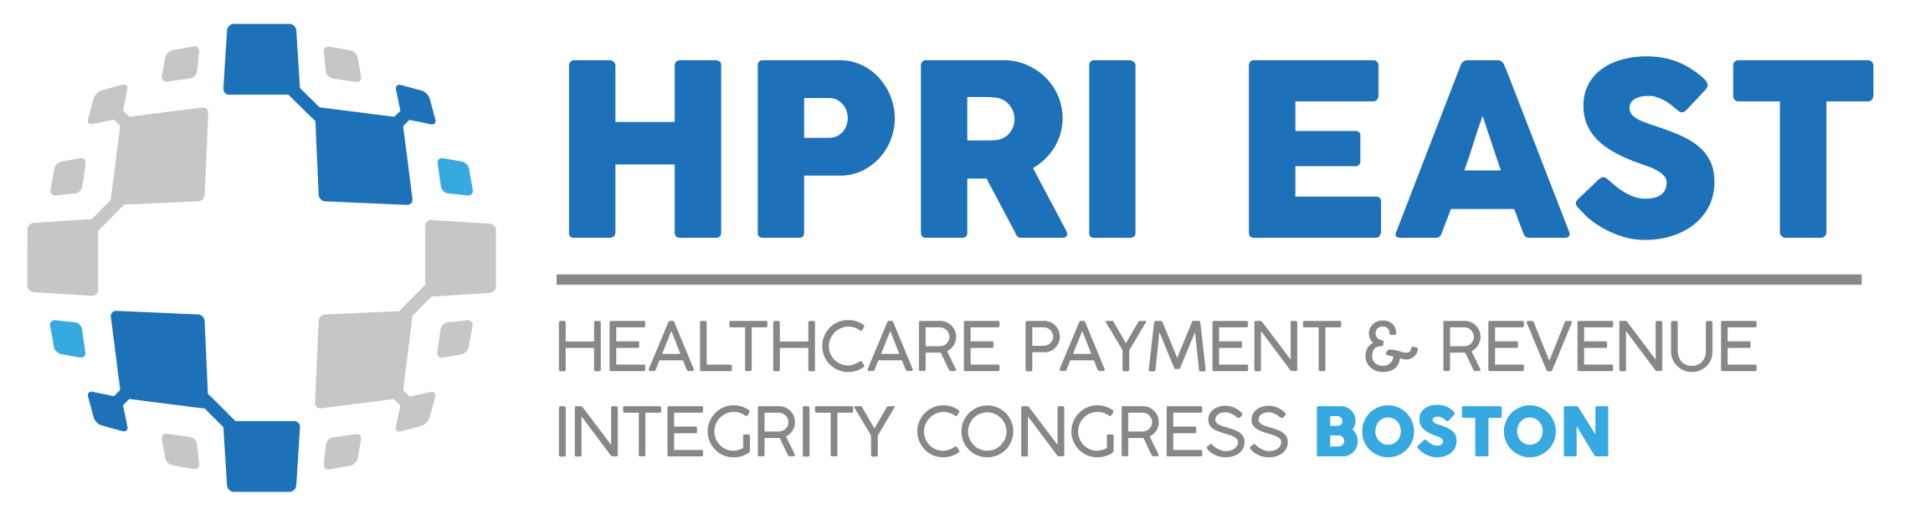 Healthcare Payment & Revenue Integrity